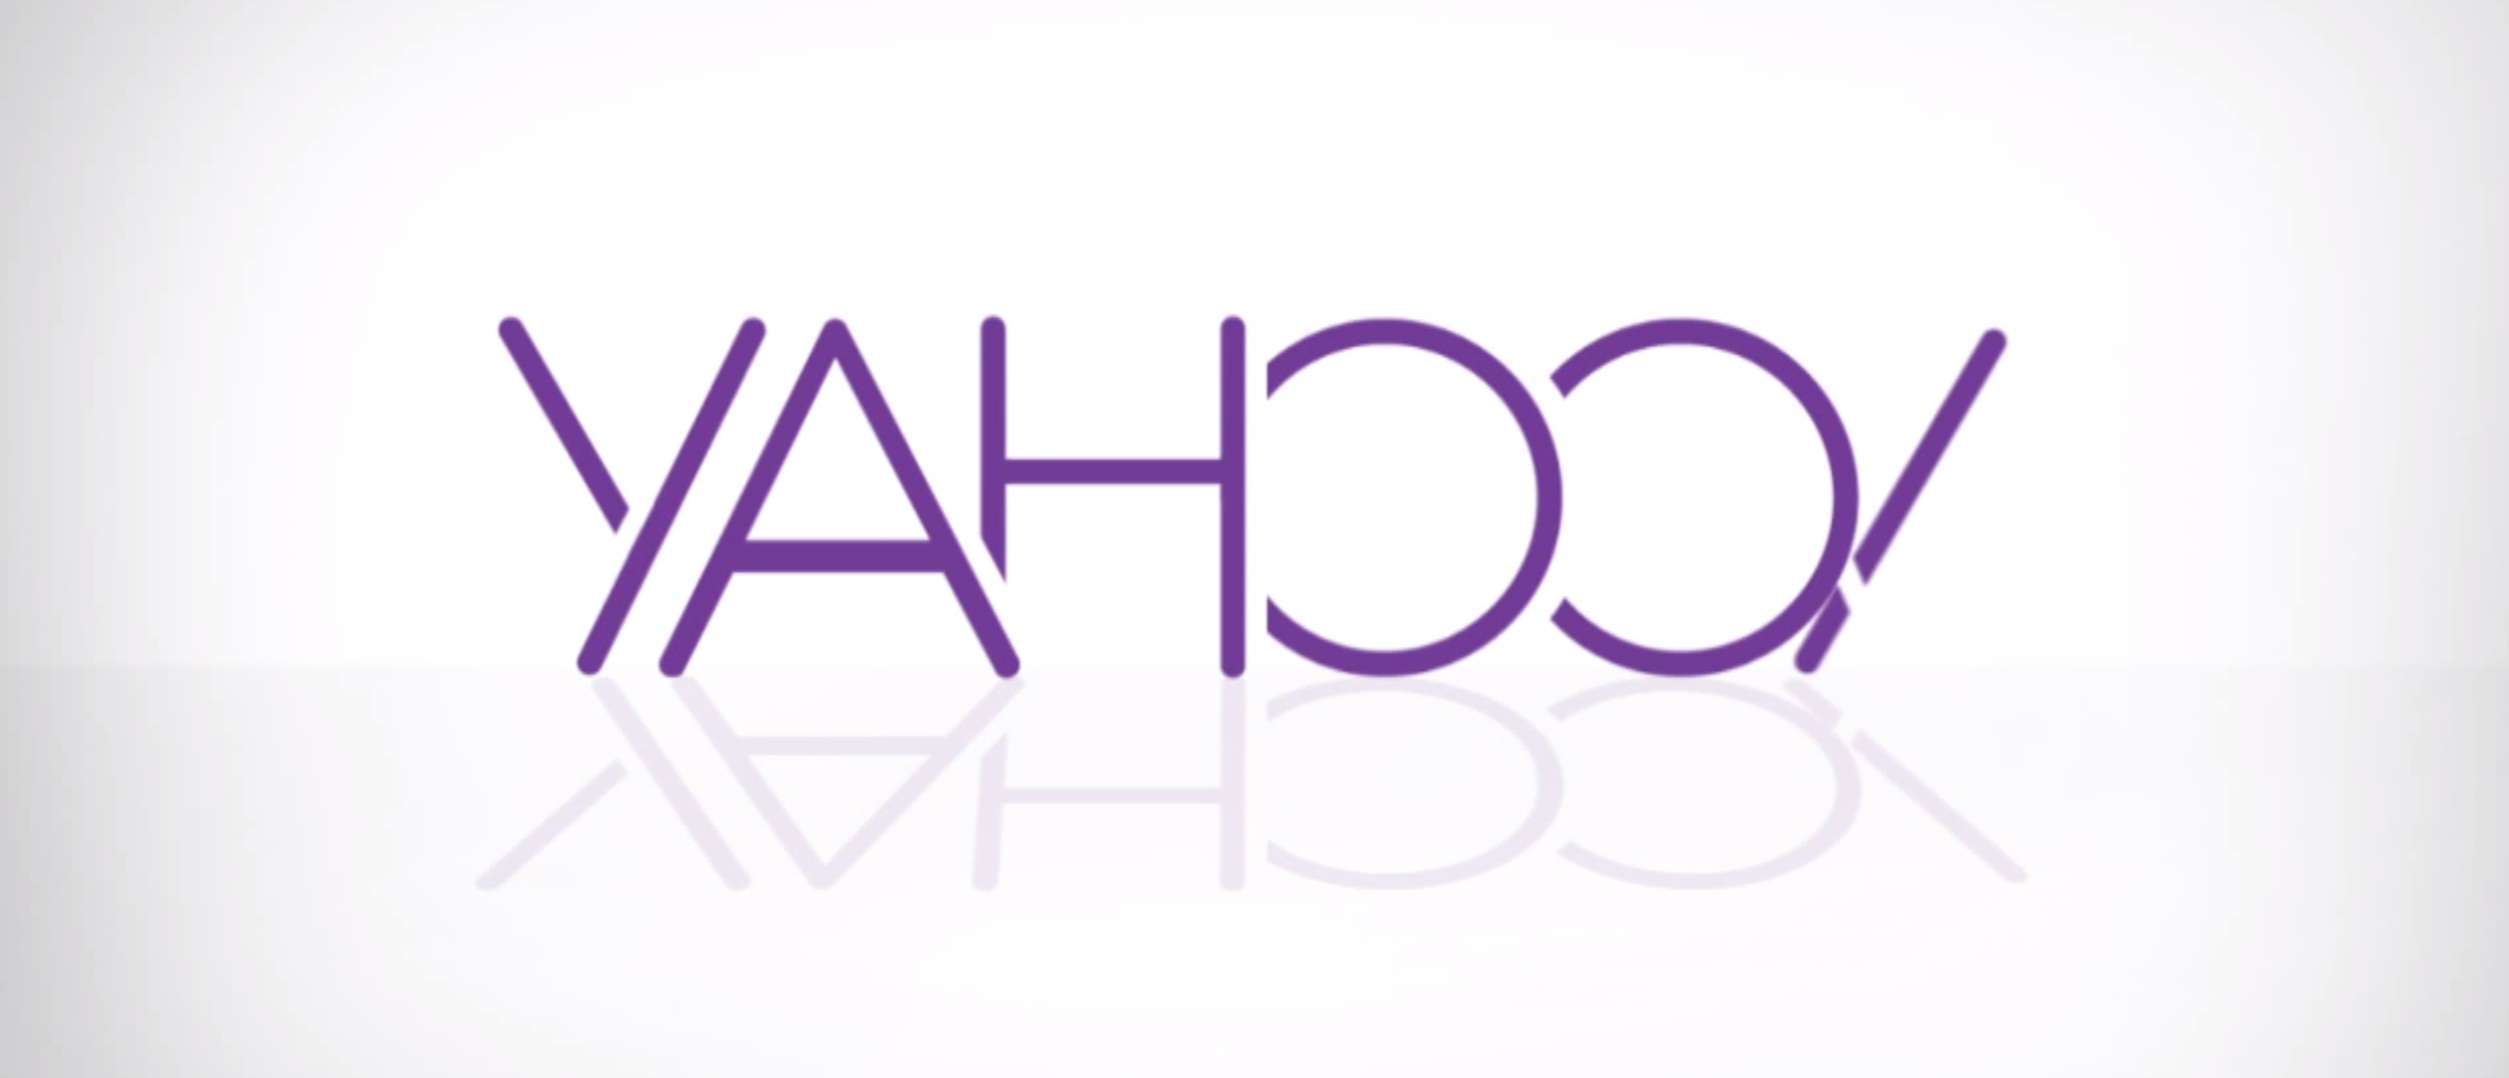 Yahoo! Wallpapers